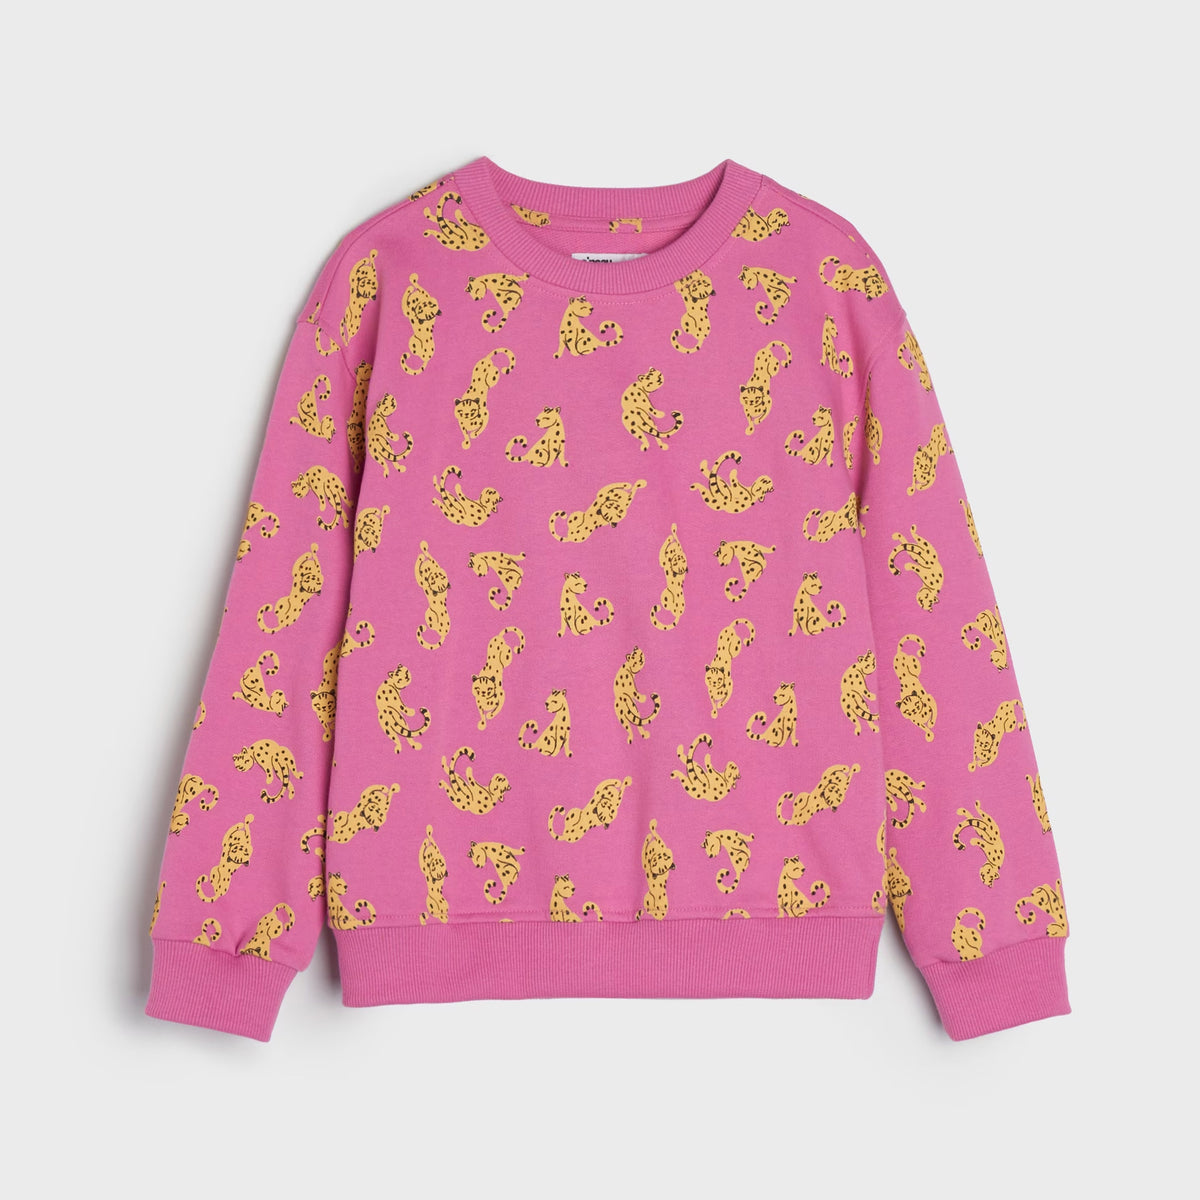 Premium Quality All-Over &quot;Cat&quot; Printed Fleece Sweatshirt For Girls